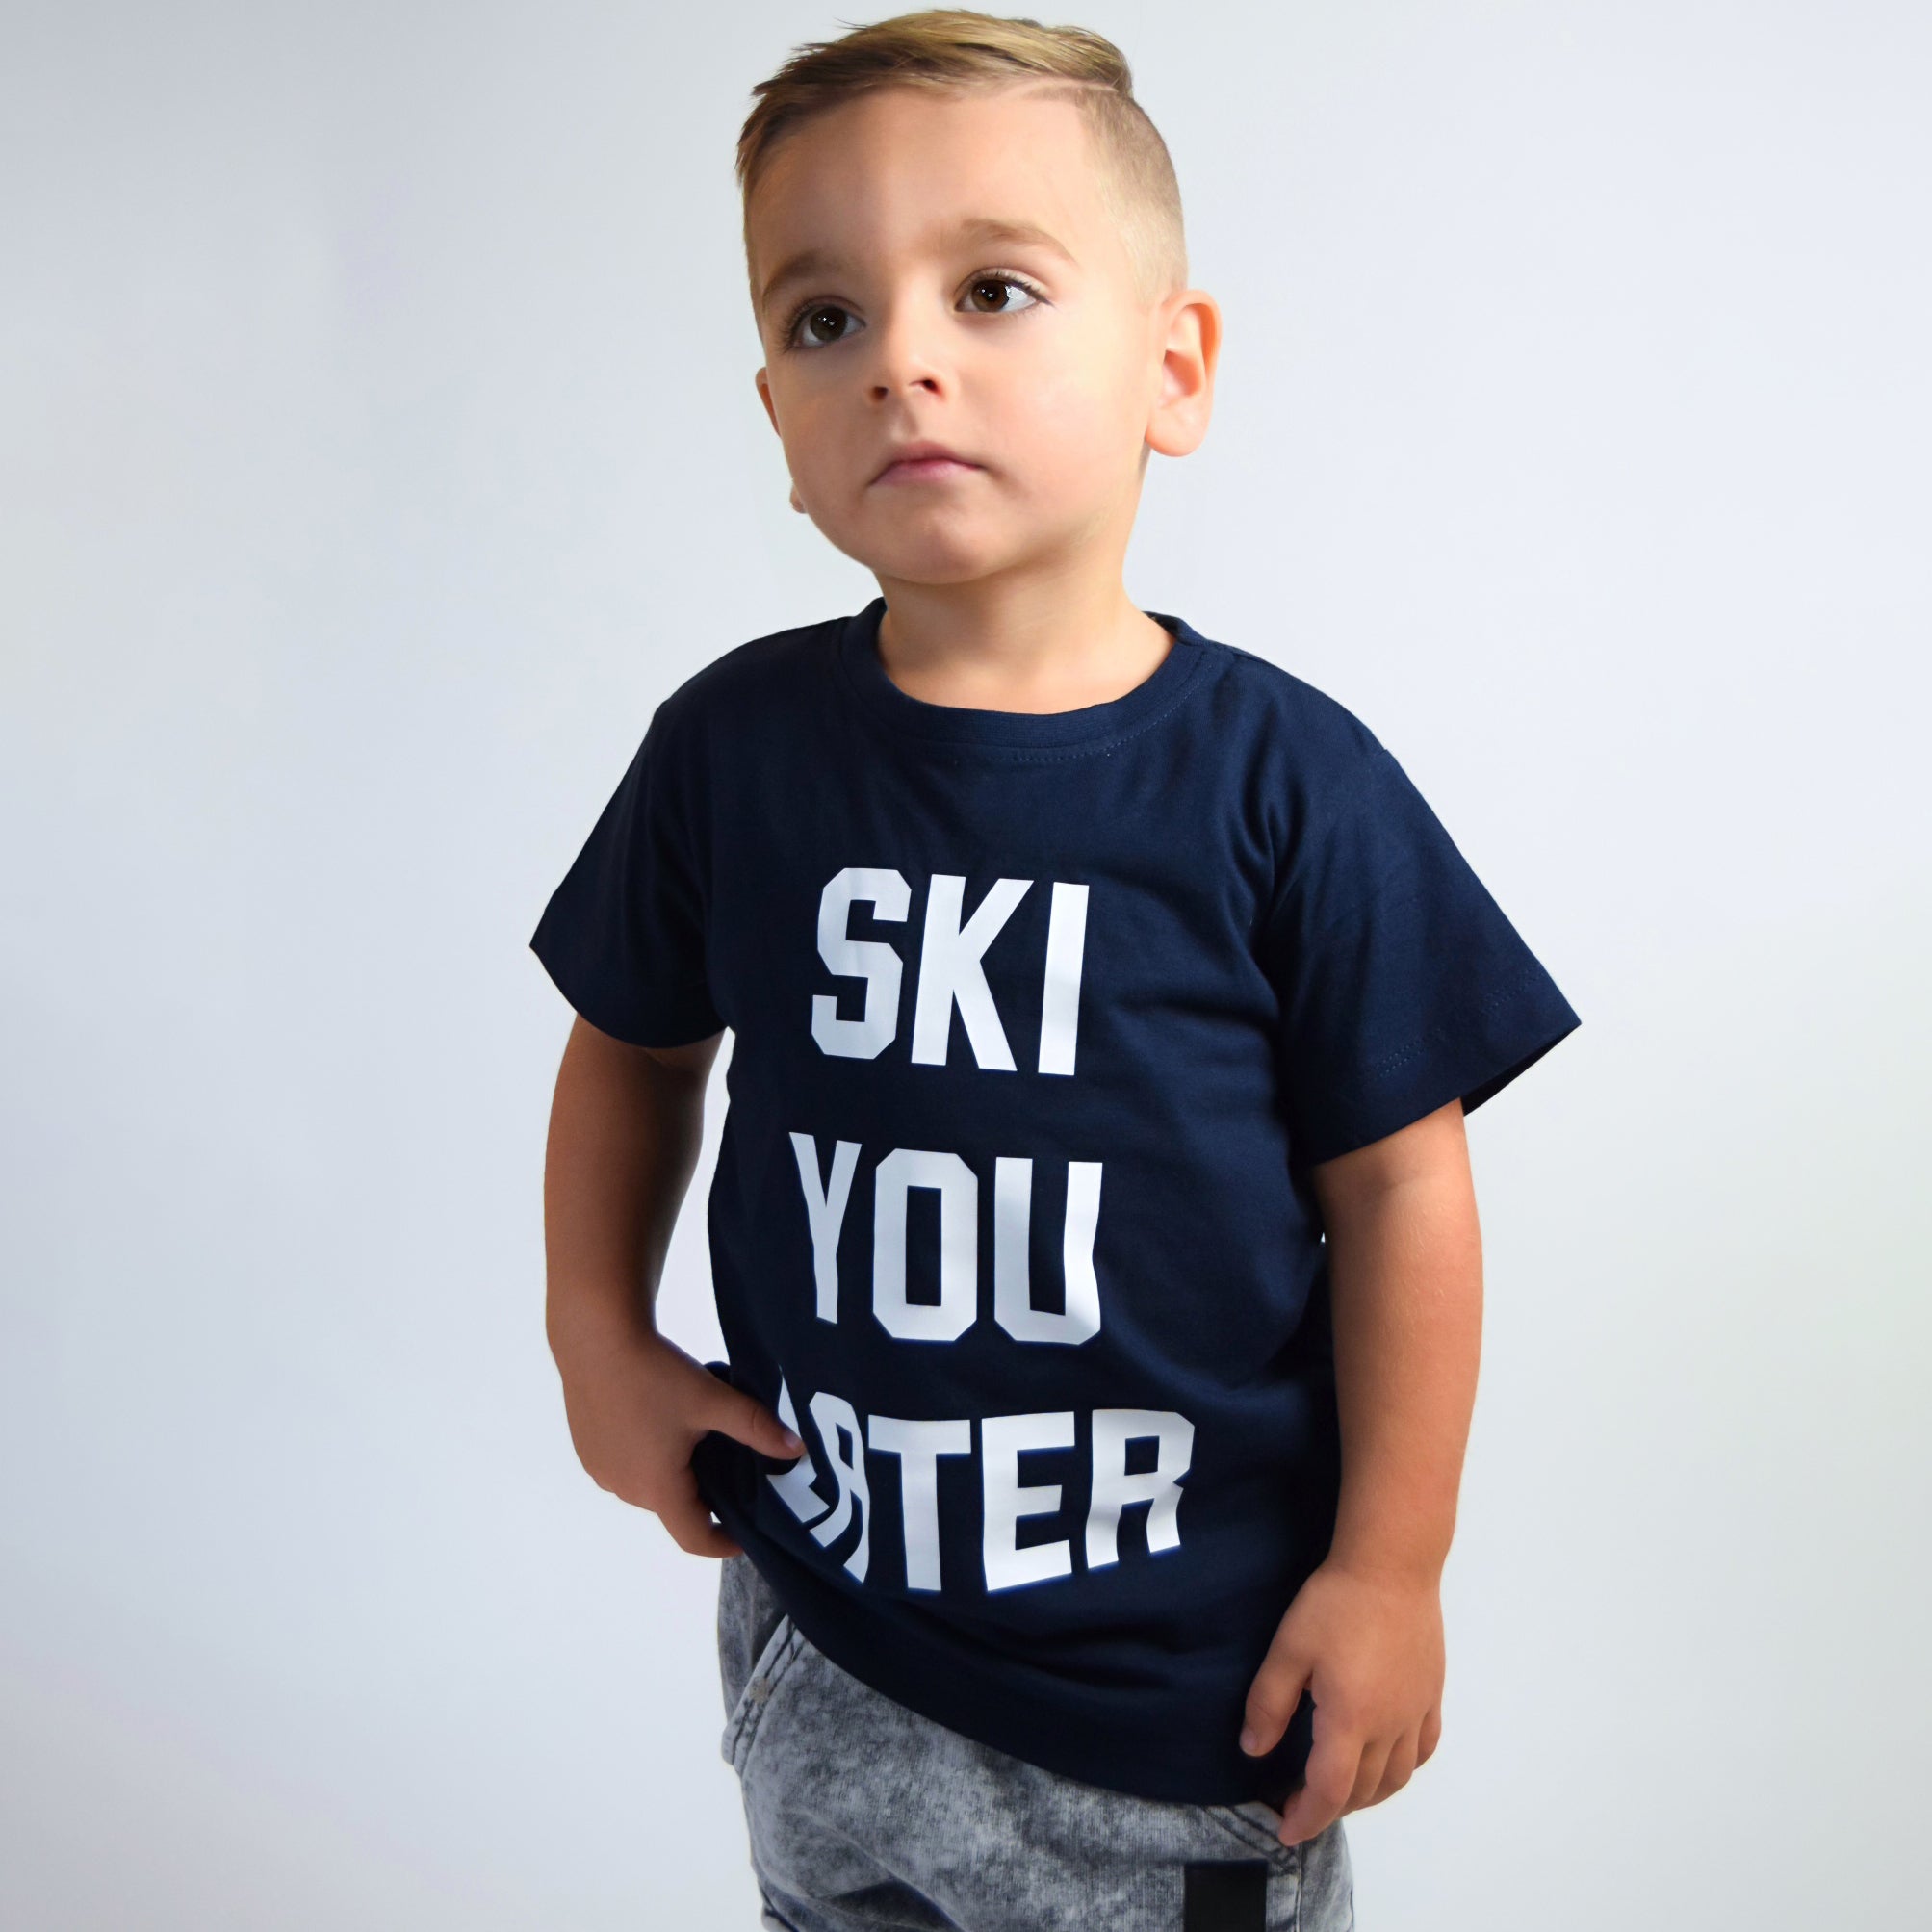 Boy wearing navy shirt with 'Ski je later' print by KMLeon.